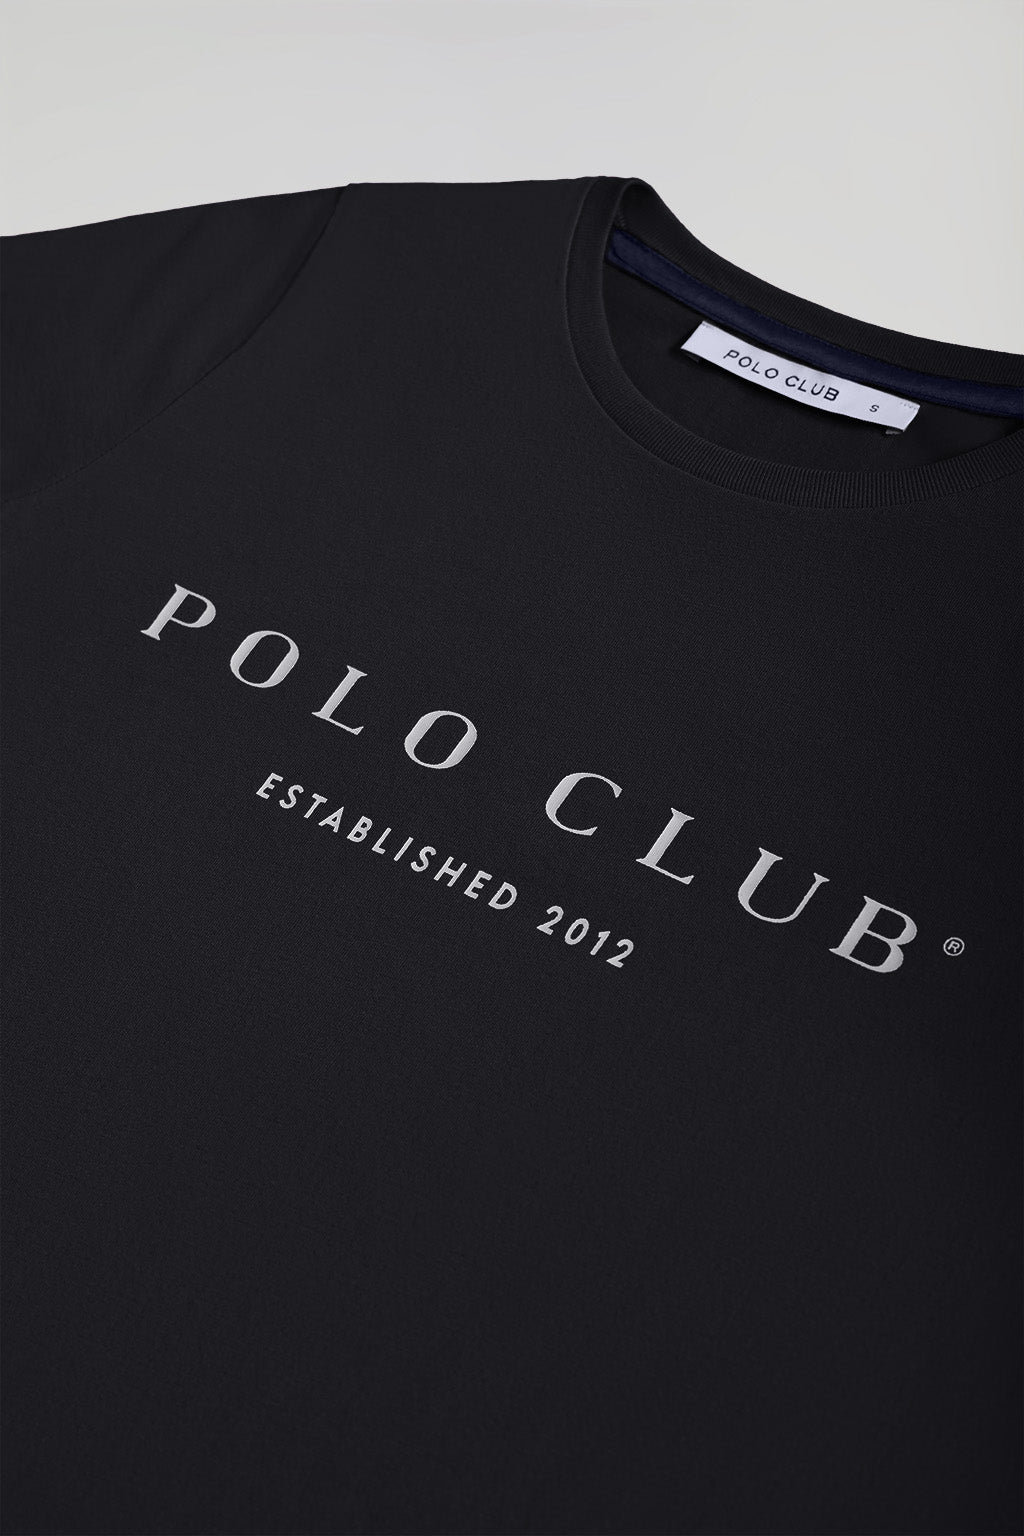 Polo Club - Mujer Camisa Negro